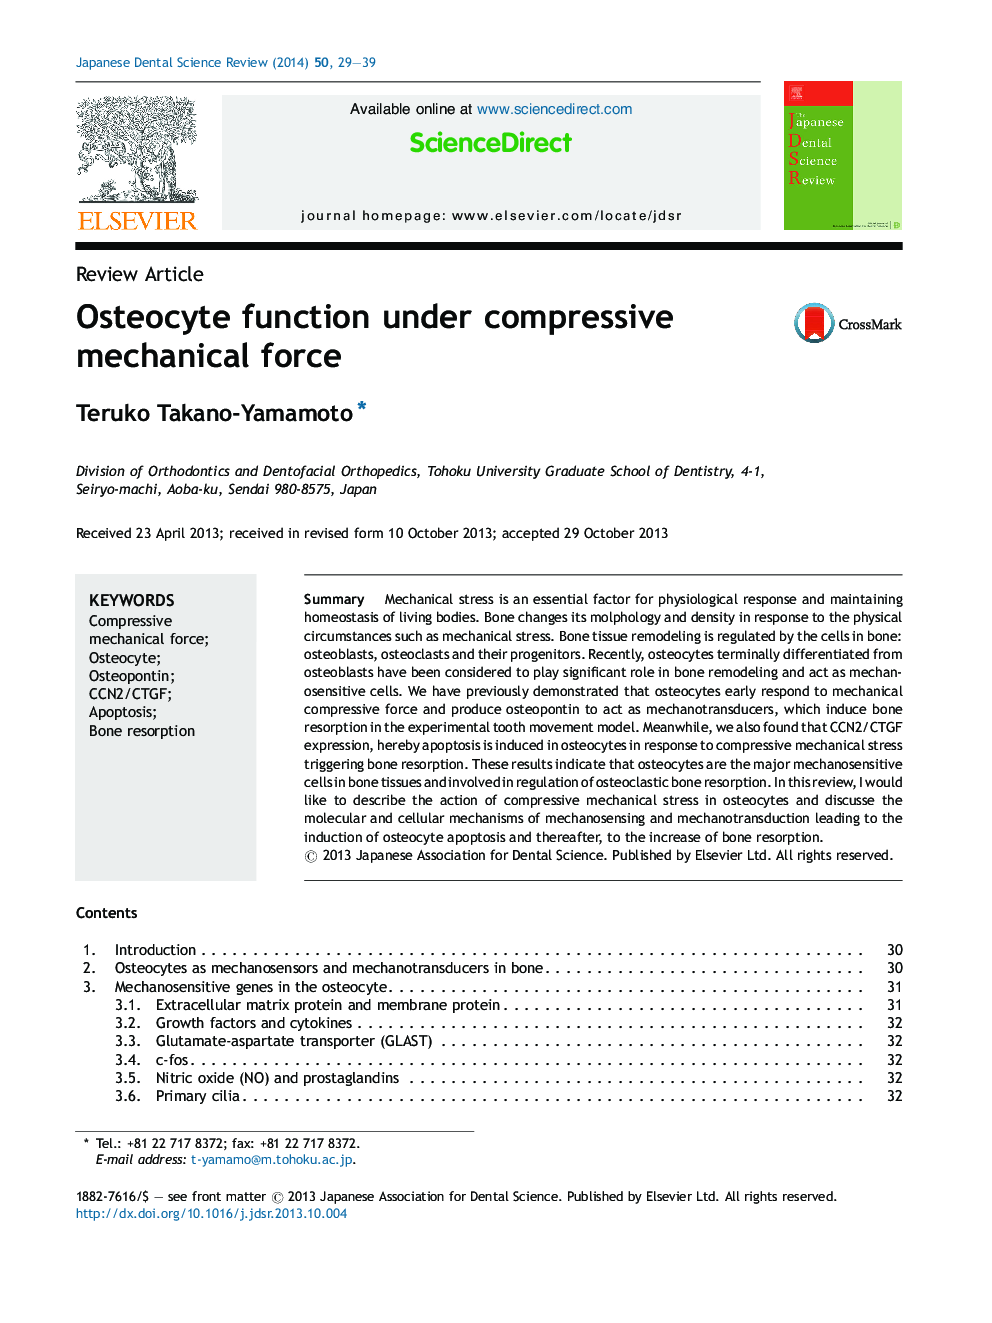 Osteocyte function under compressive mechanical force